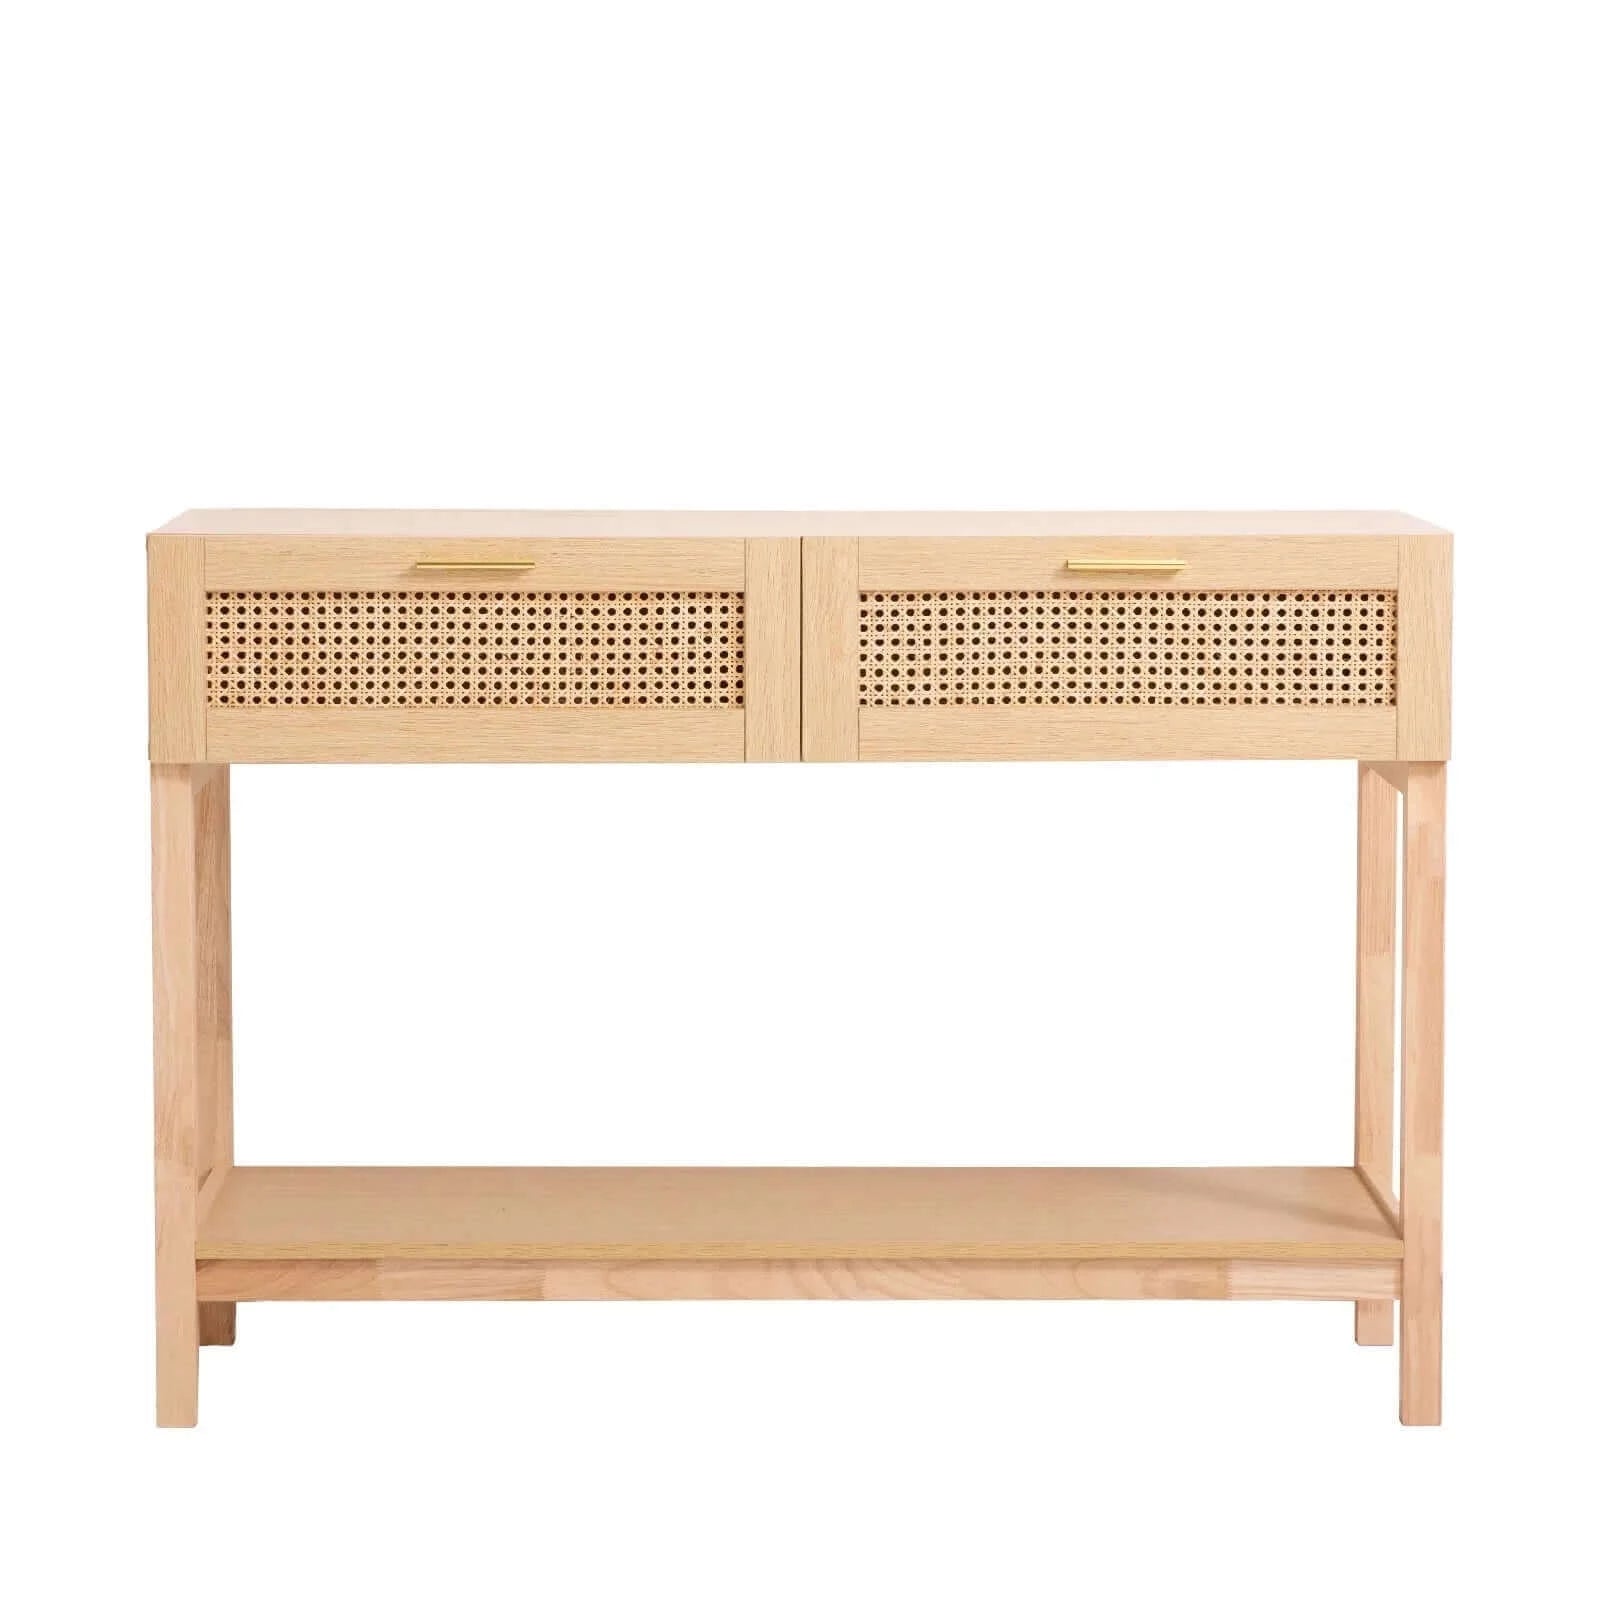 Buy casa decor santiago rattan console table entry table storage hallway wood oak - upinteriors-Upinteriors